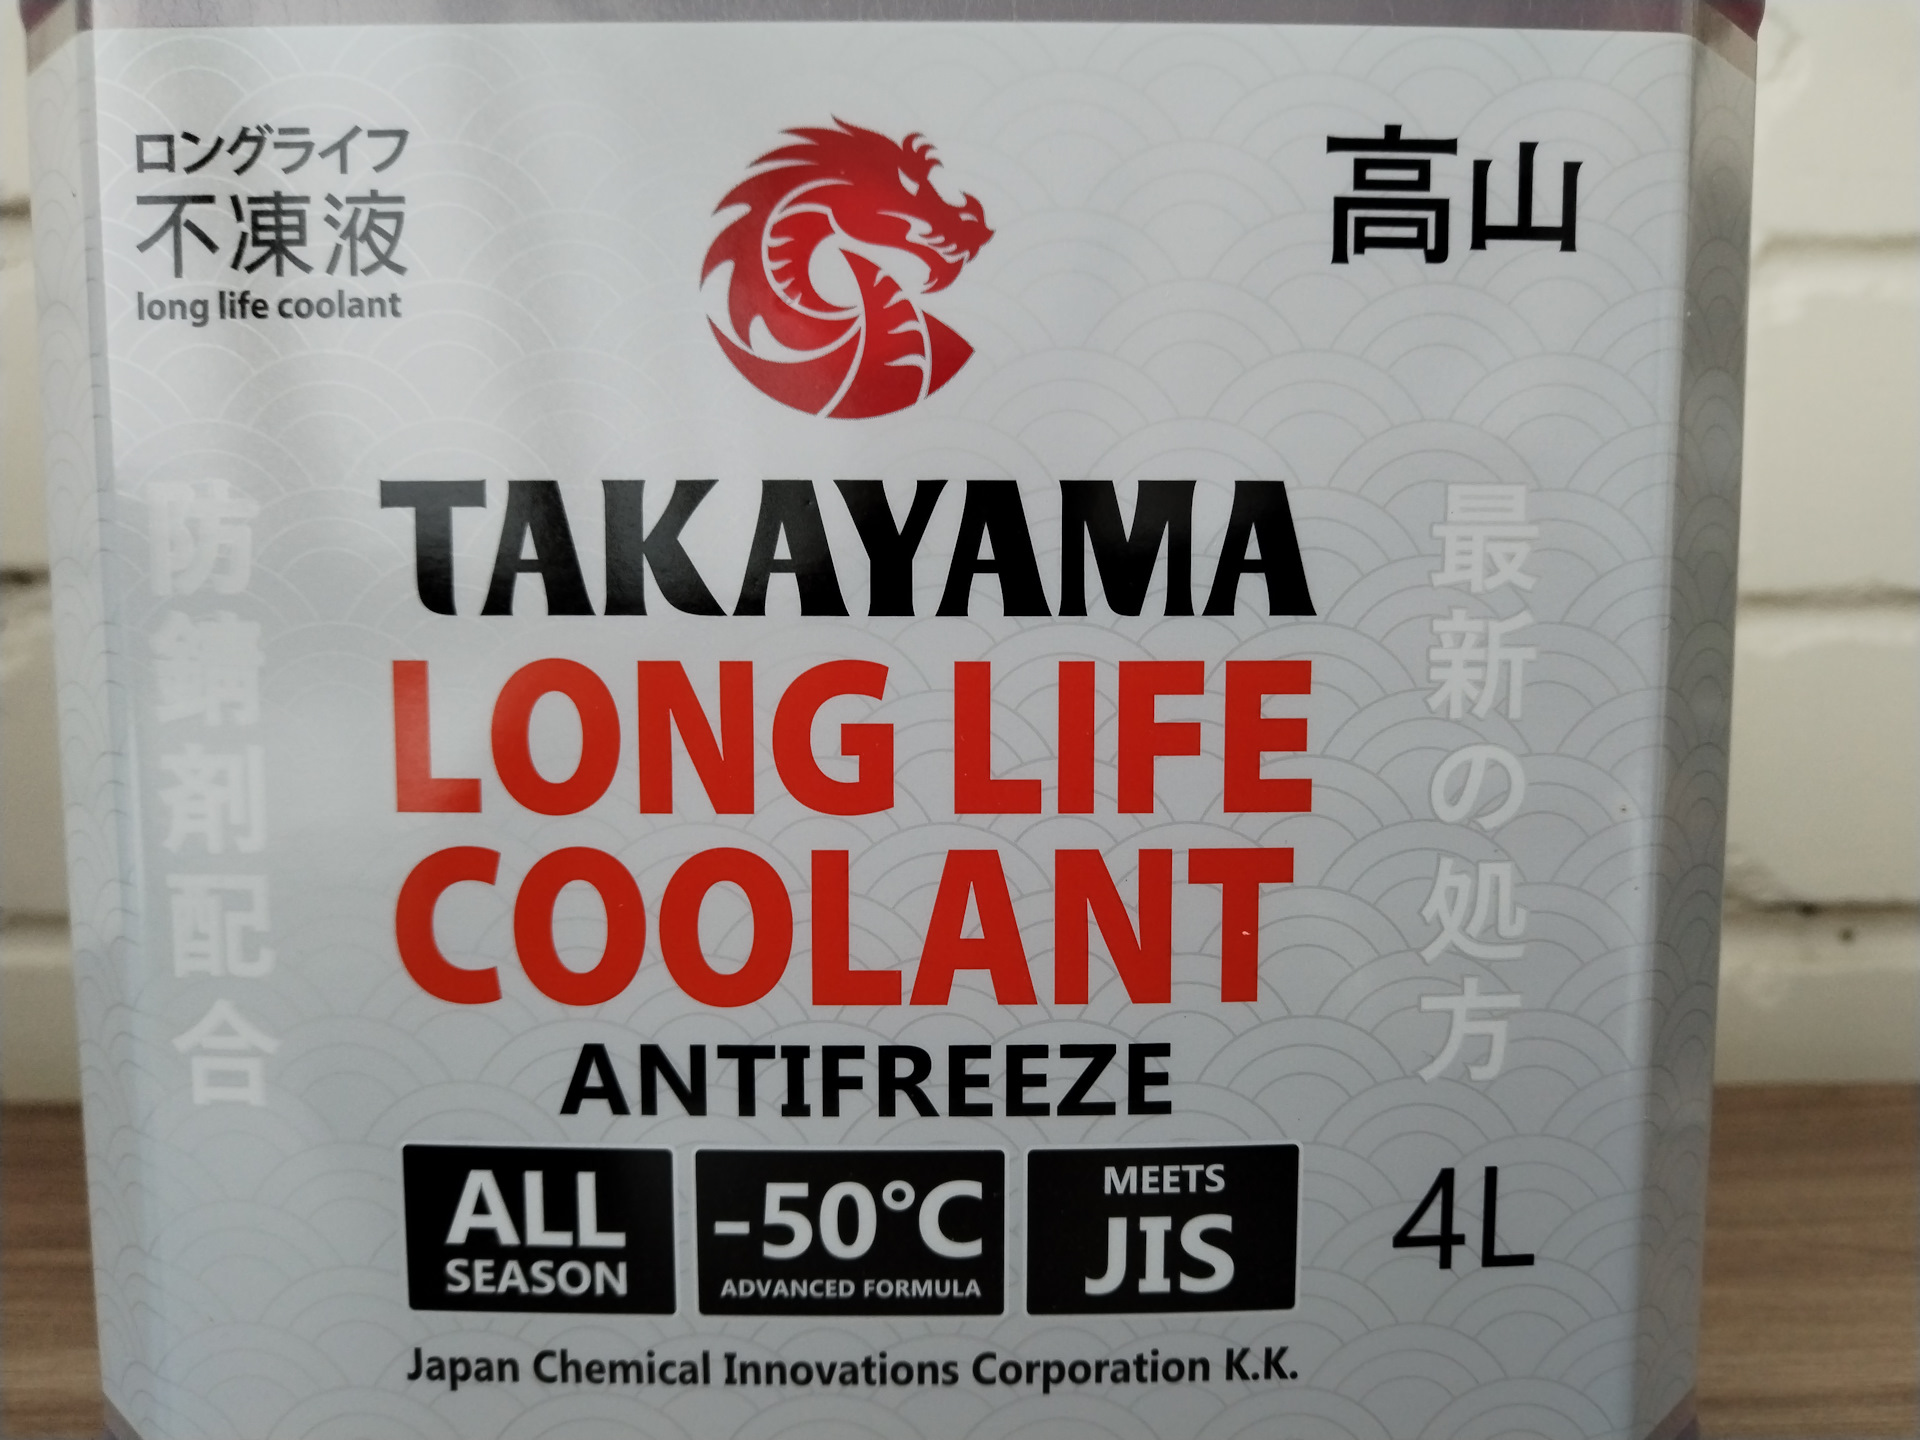 Tcl long life coolant. 700507 Takayama long Life Coolant Red -50, красный 2 л. Антифриз Takayama long Life Red (-50), 2л.. 700507 Takayama long Life Coolant Red -50, красный 4 л. Takayama long Life Coolant Green -50 антифриз зеленый 2л.